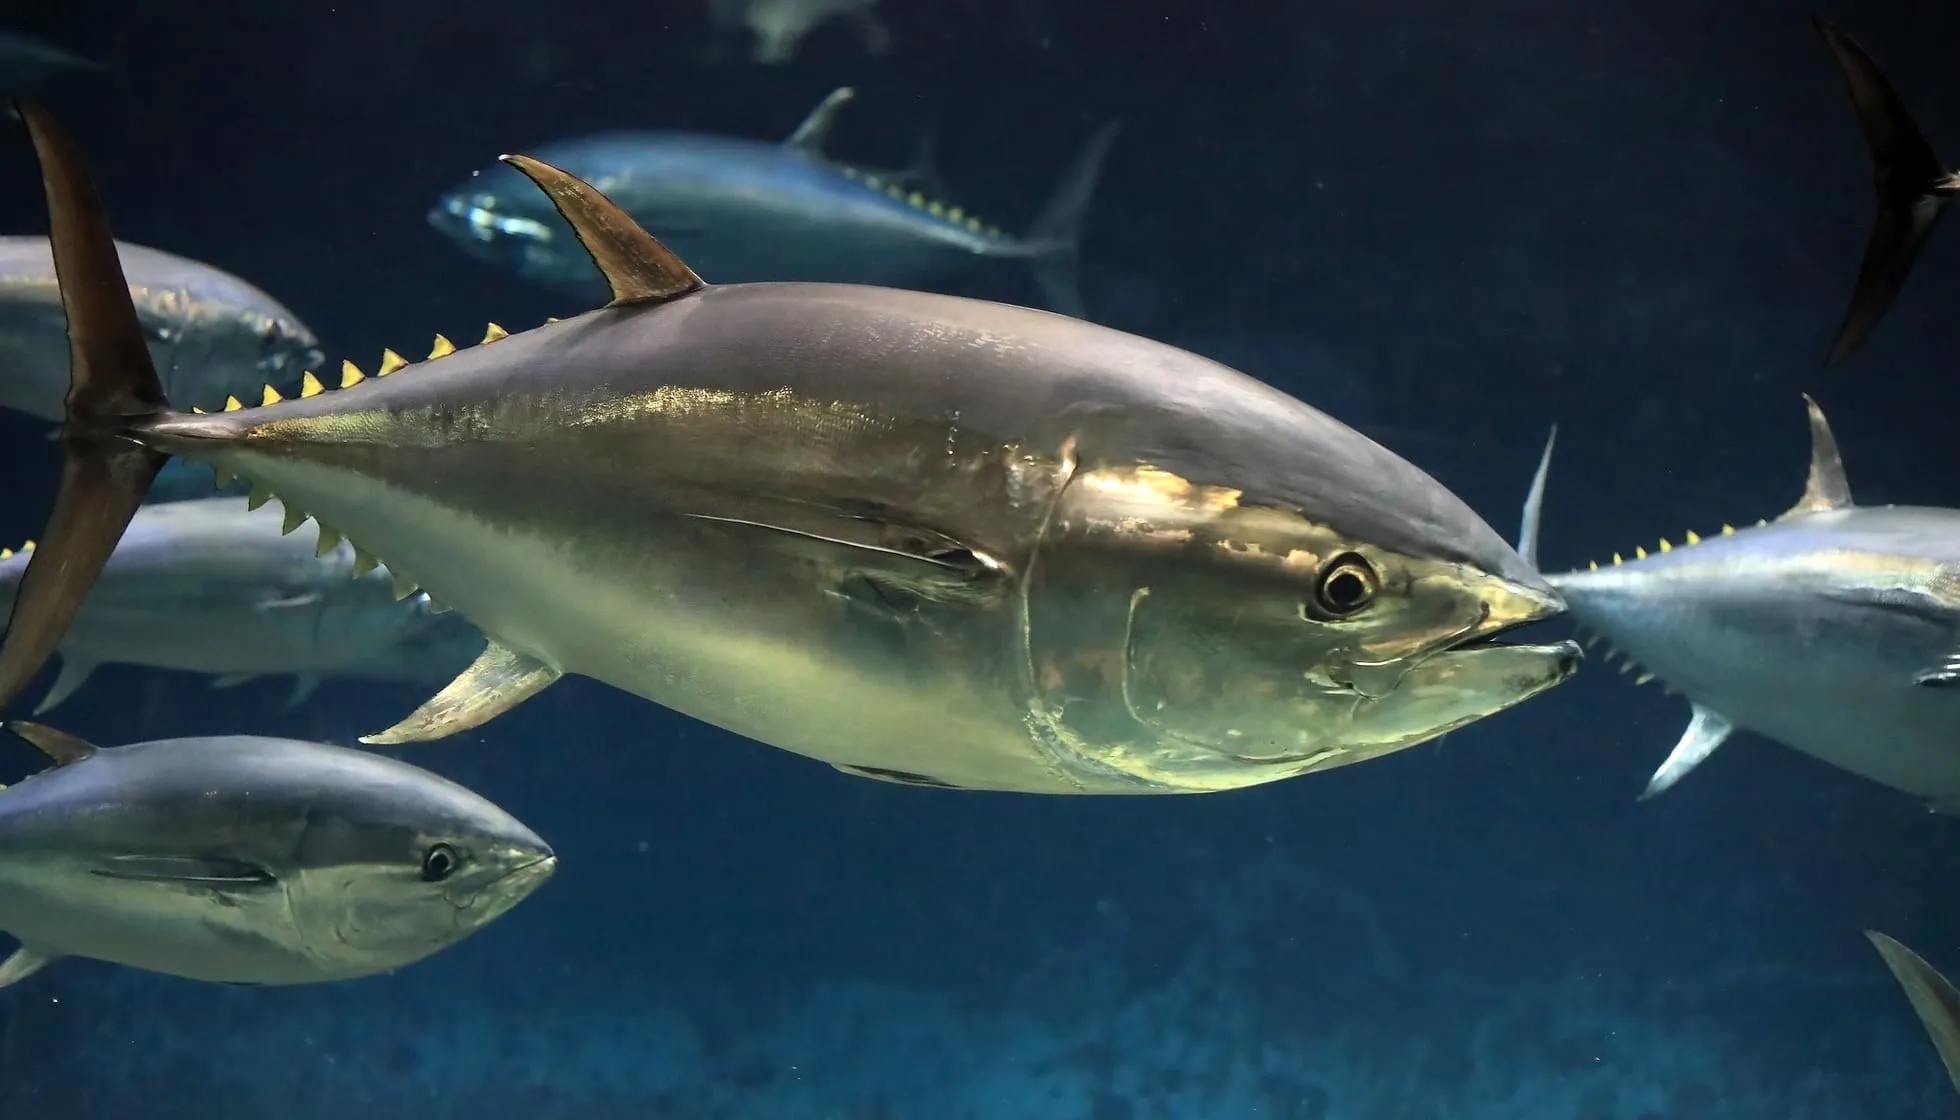 Pacific bluefin tuna (Thunnus orientalis) in Japan